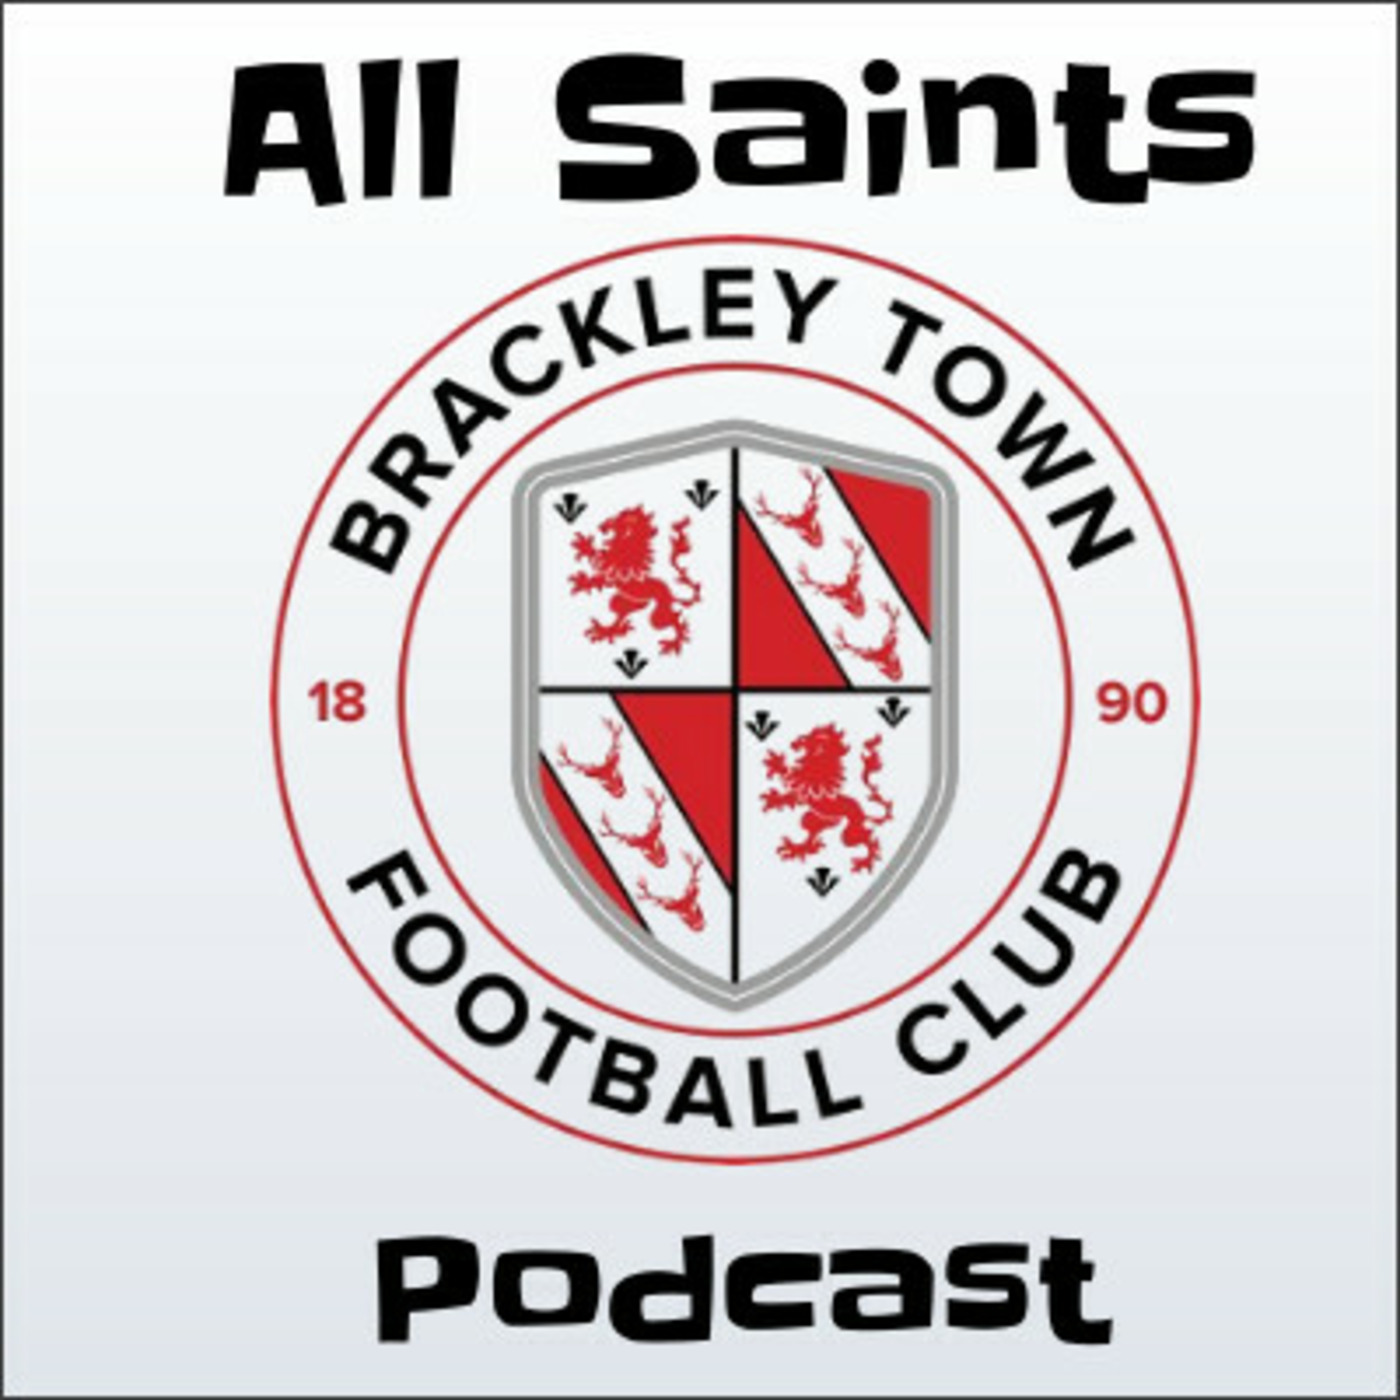 Episode 39: All Saints Podcast 70